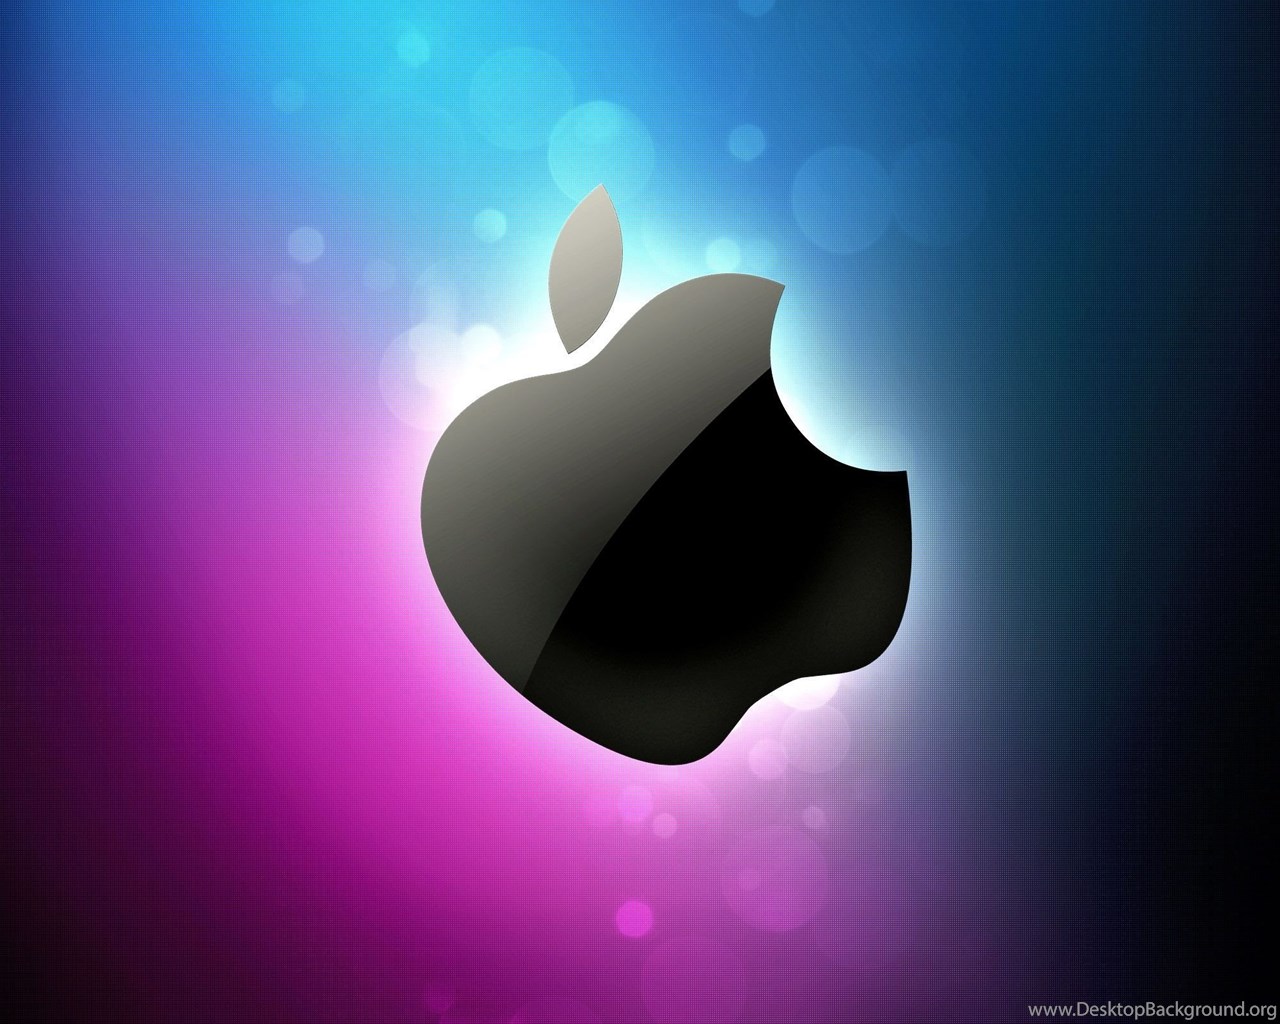 Official Apple Logo High Resolution Wallpaper. Desktop Background